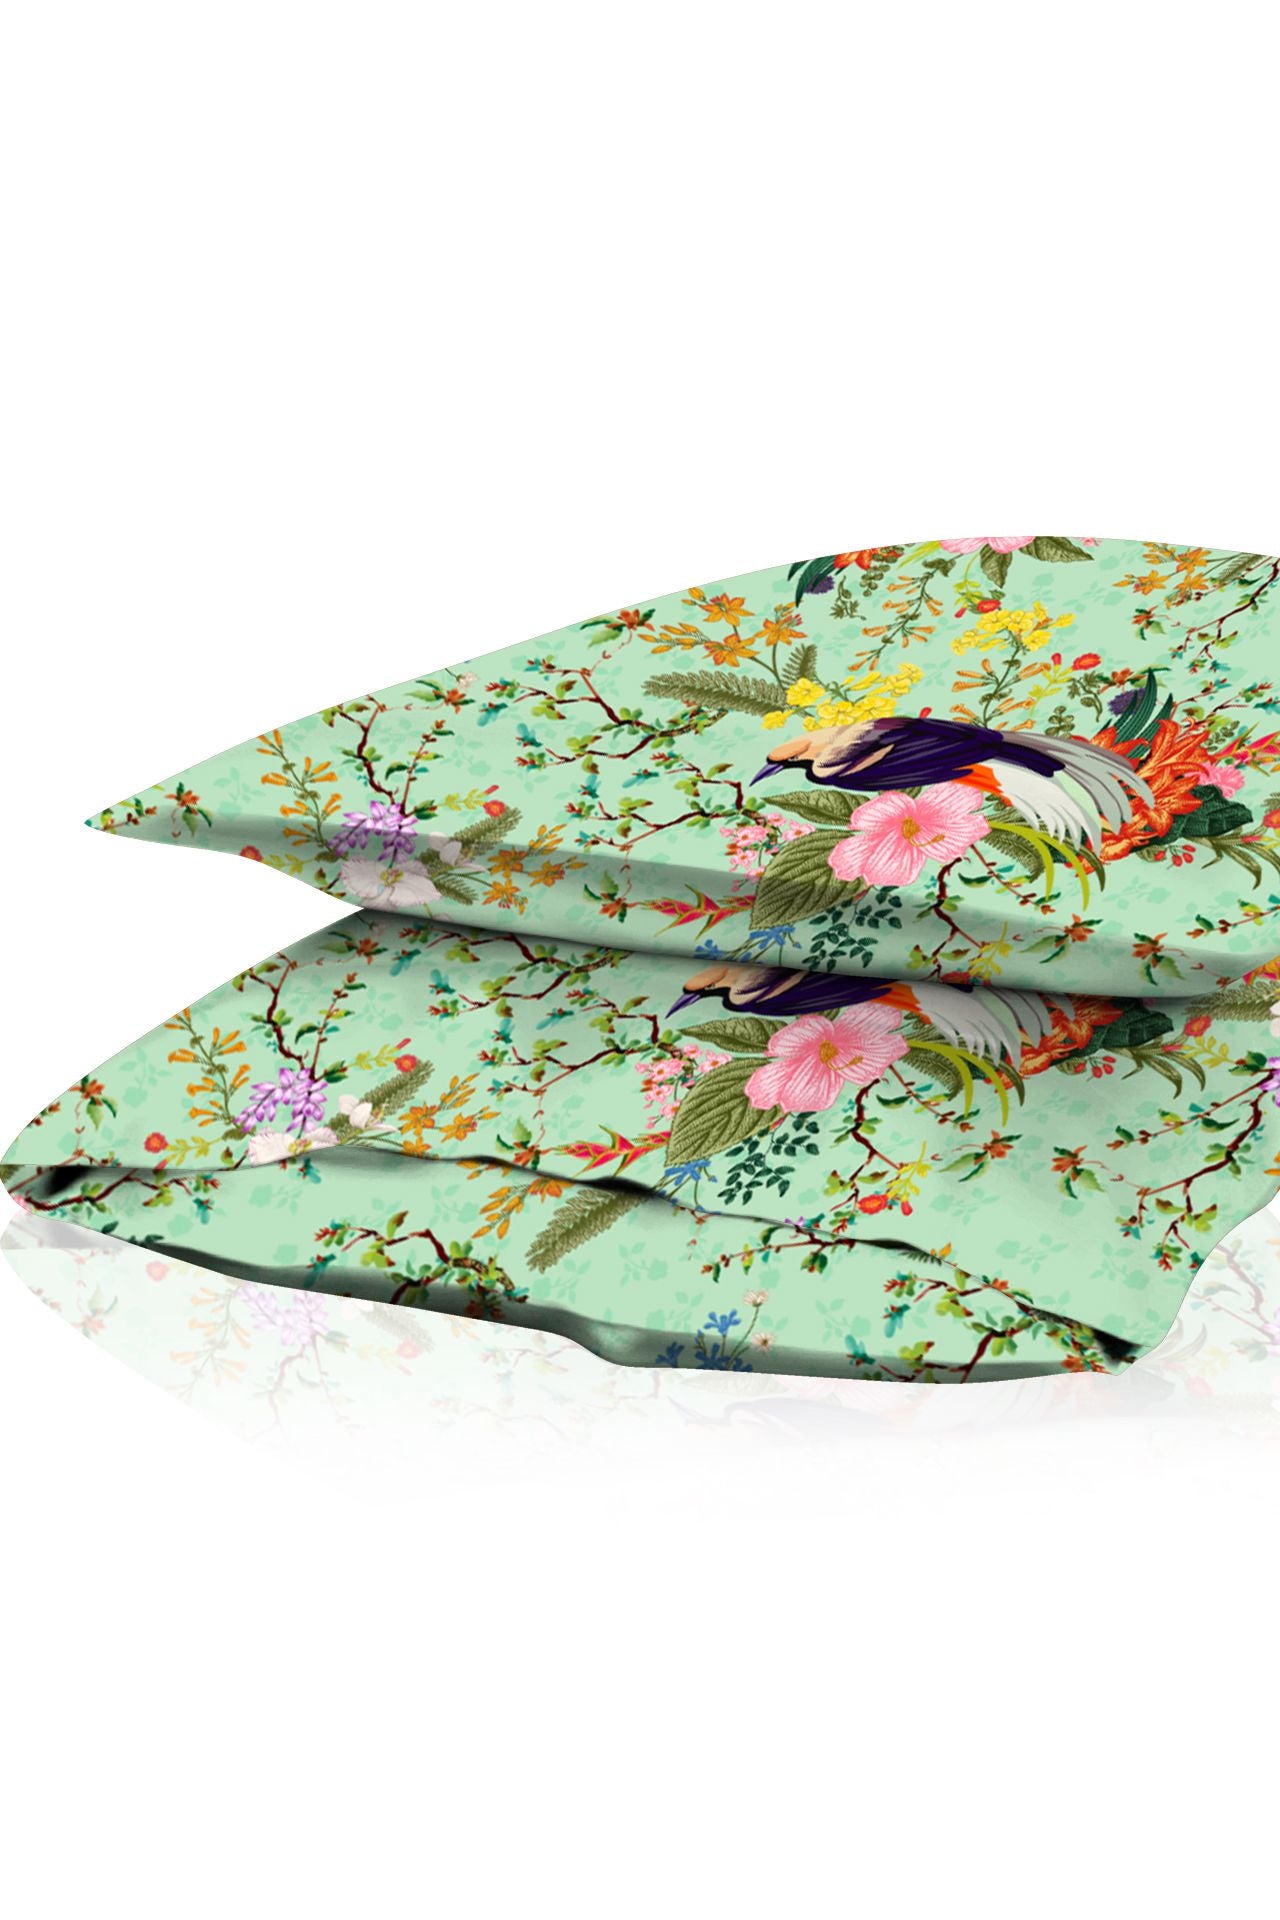 Designer Throw Pillow Cover in Bird Print